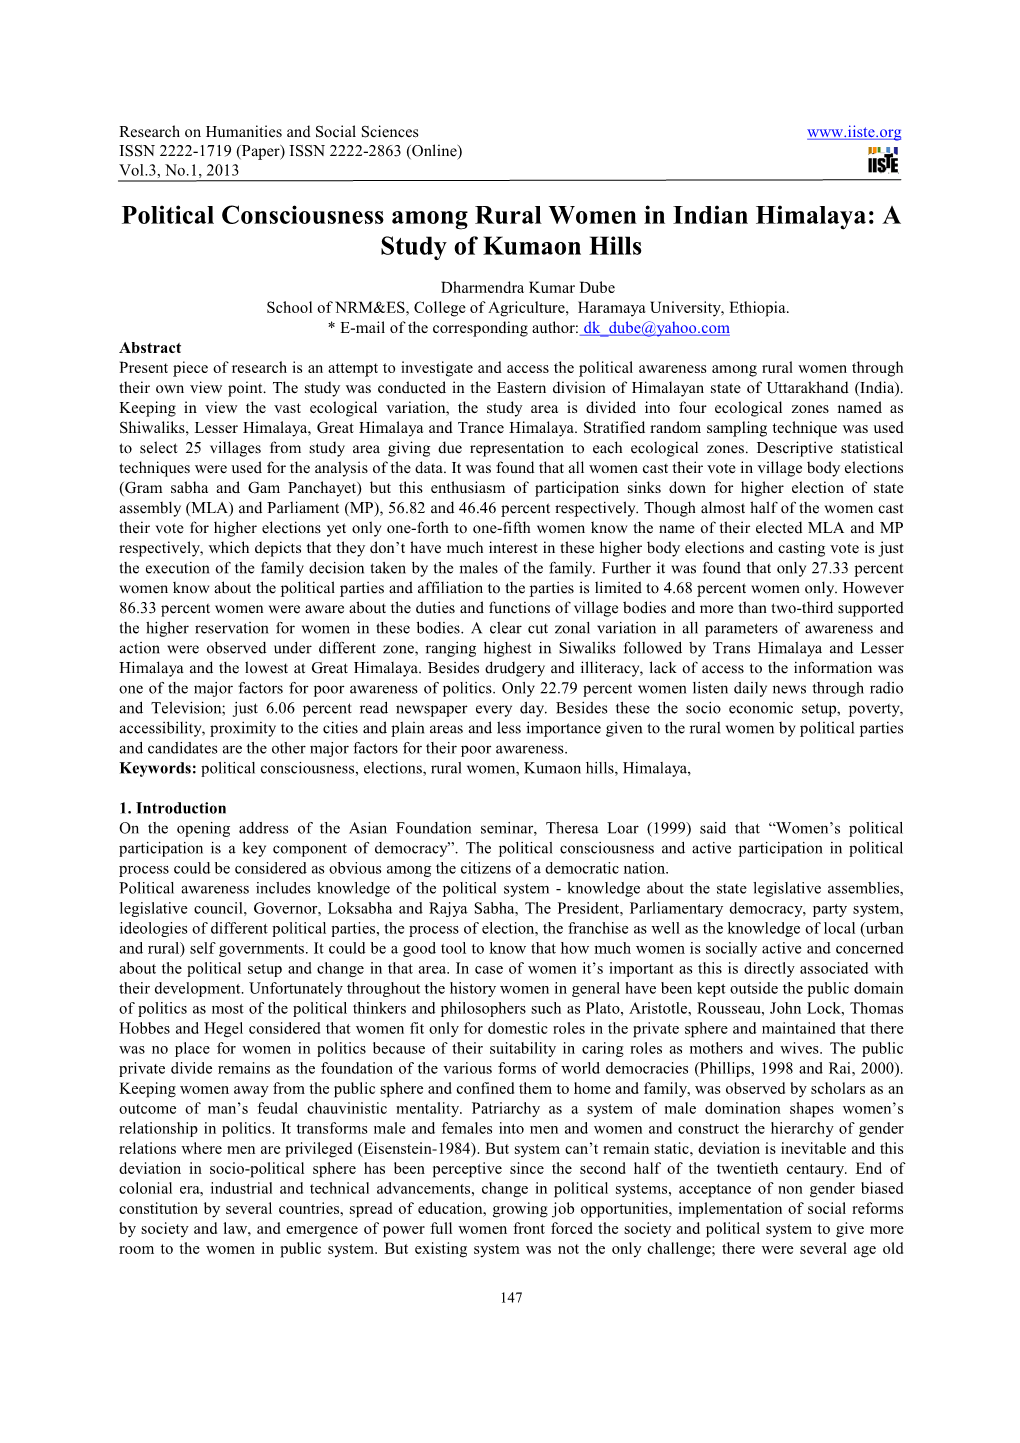 Political Consciousness Among Rural Women in Indian Himalaya: a Study of Kumaon Hills